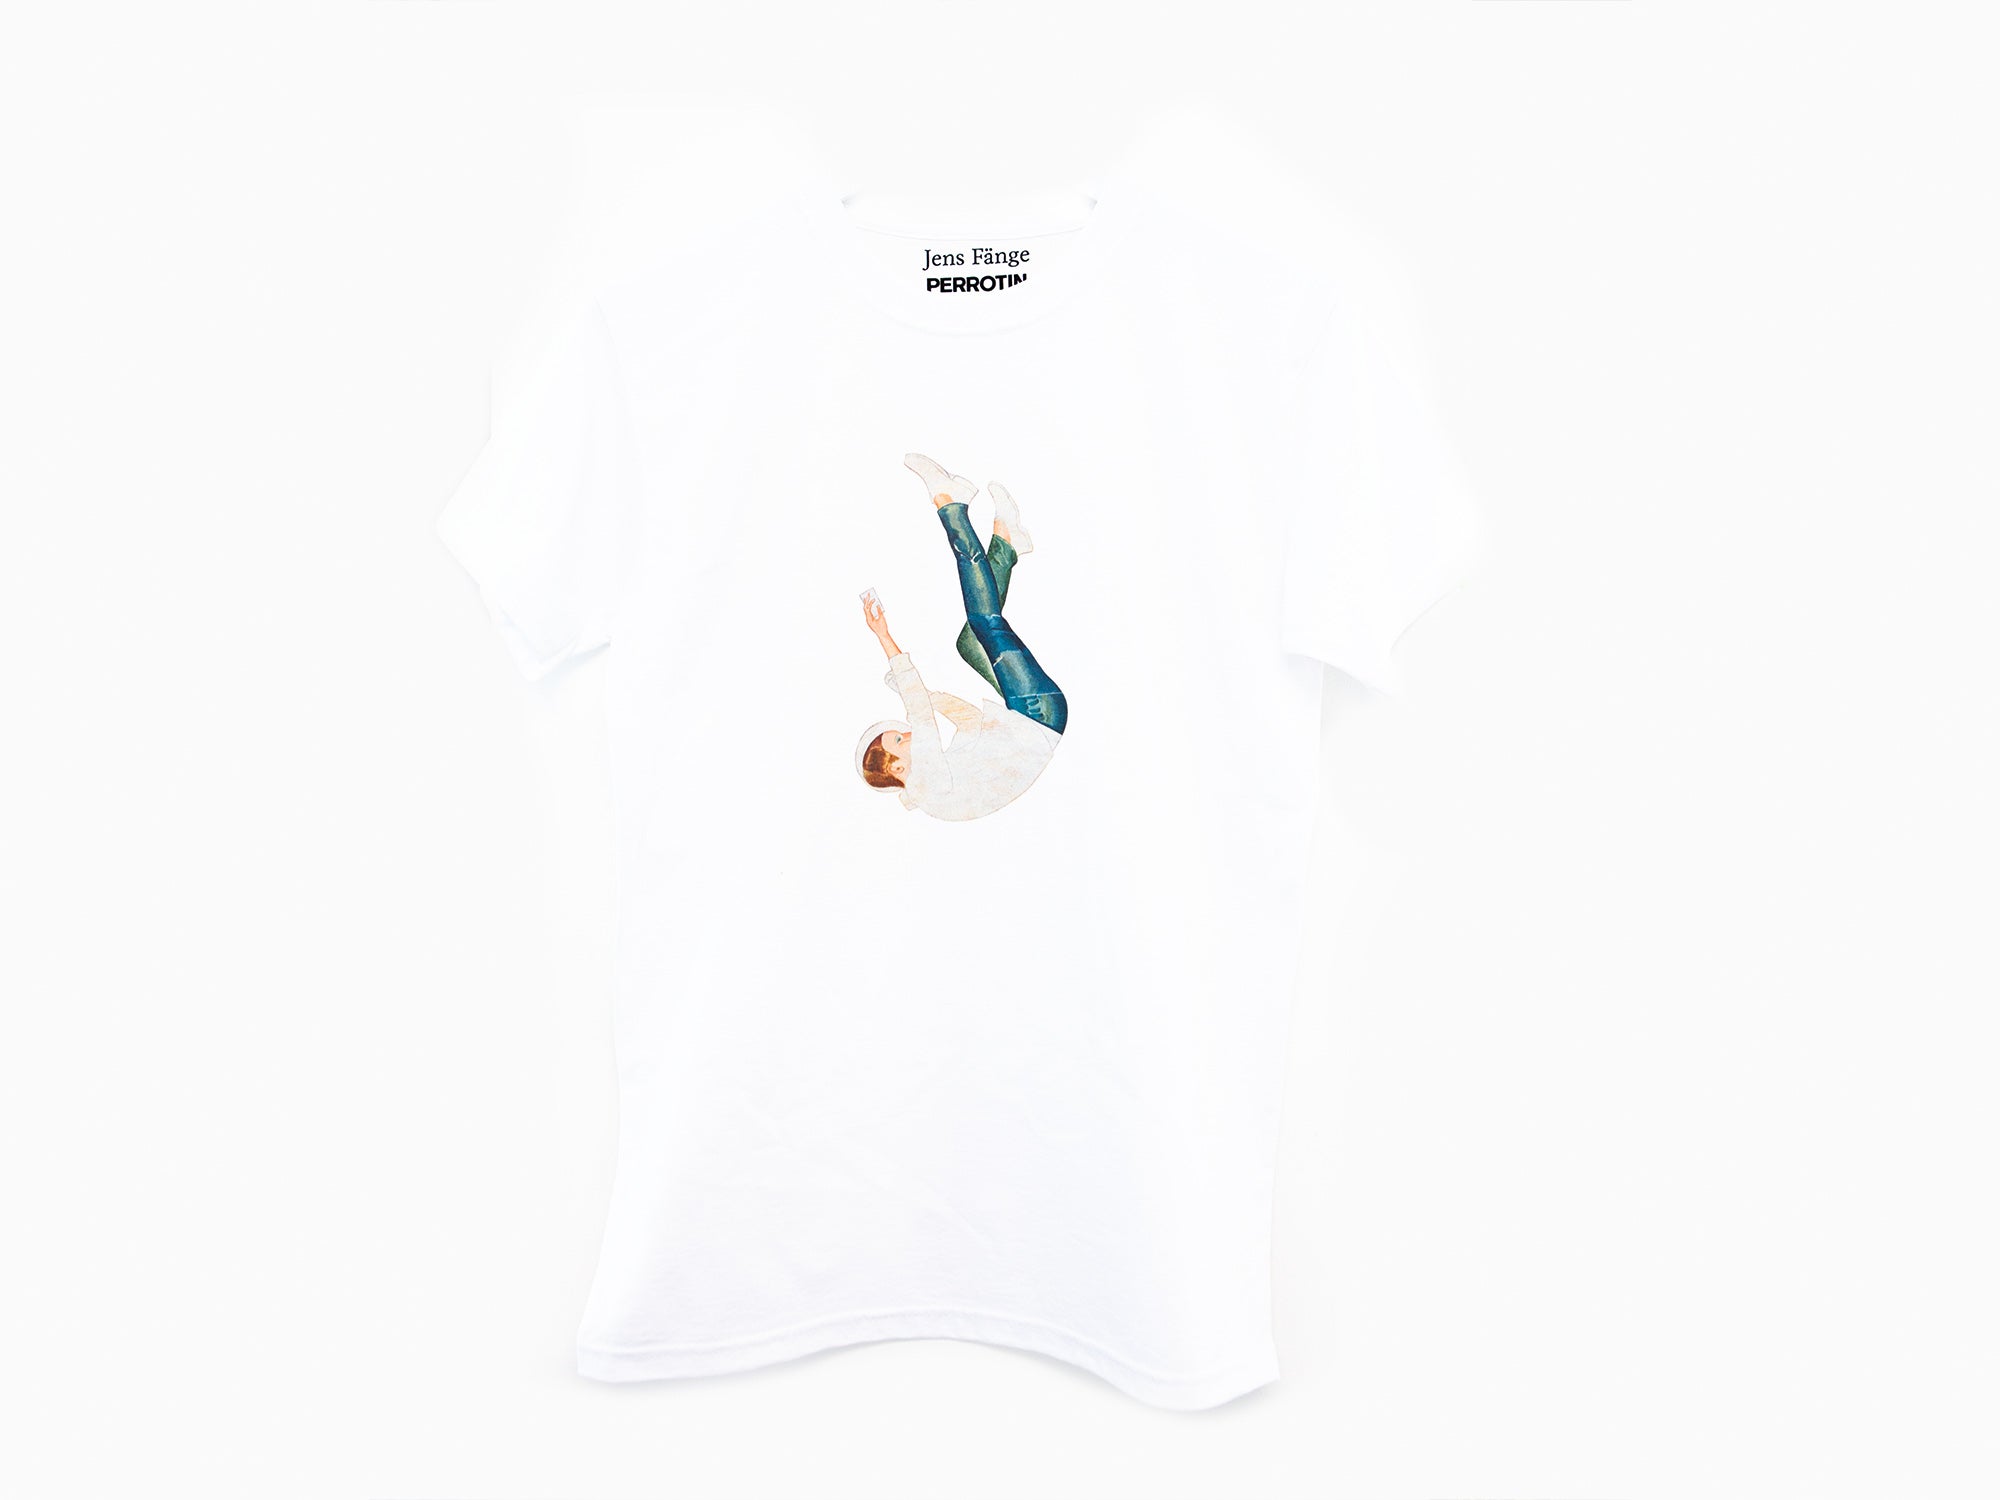 Perrotin x Jens Fänge - "The Pensive Air" T-shirt